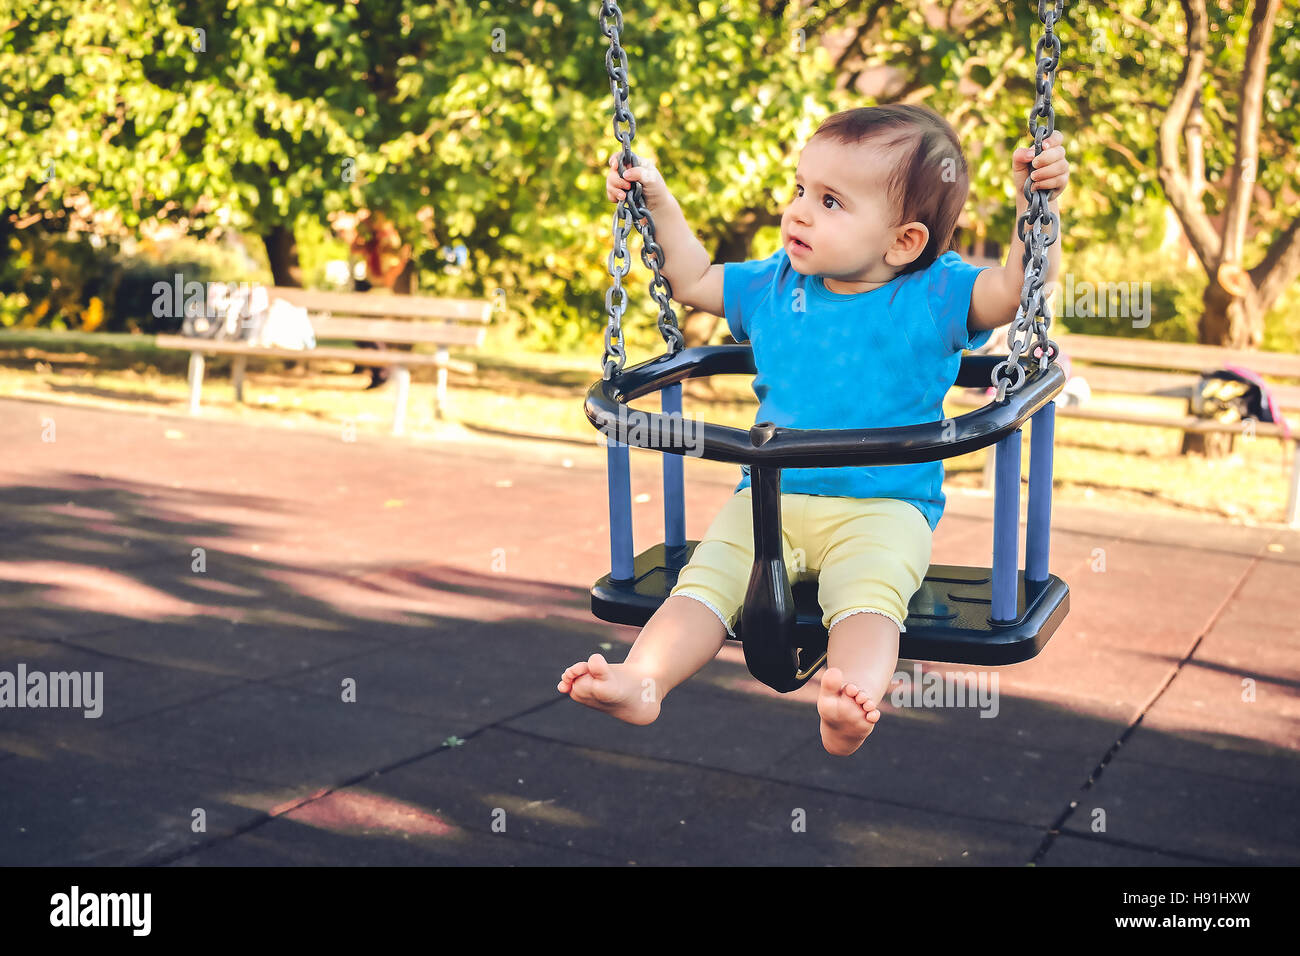 Neugeborenes Babyschaukel spielen Park outdoor Sommer Spielplatz Stockfoto